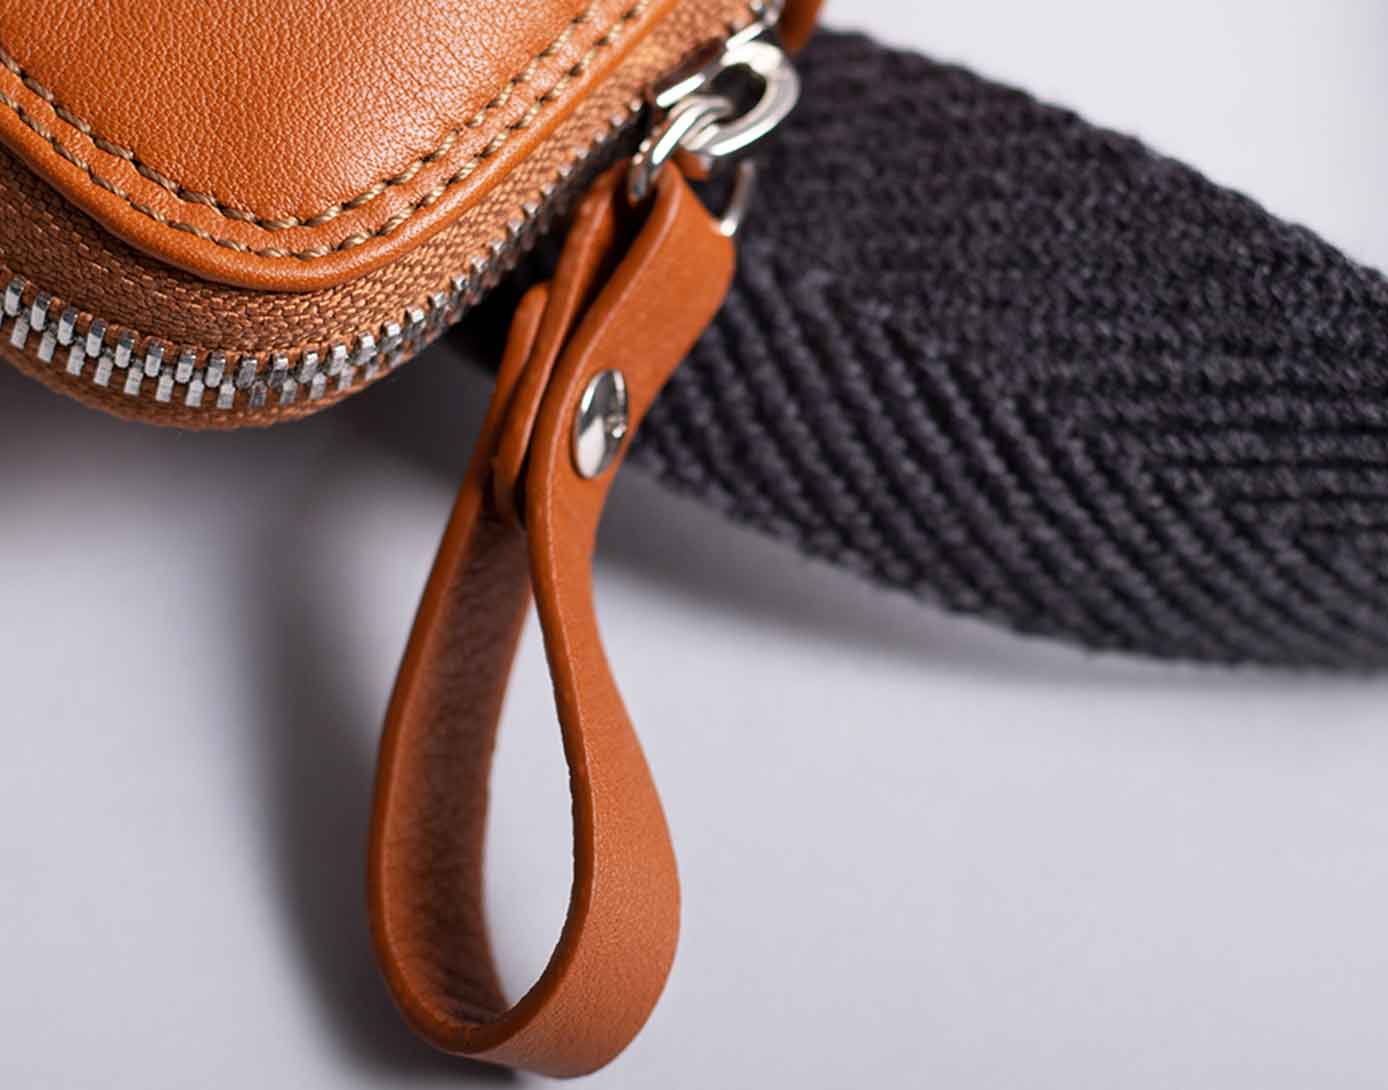 leather sling crossbody